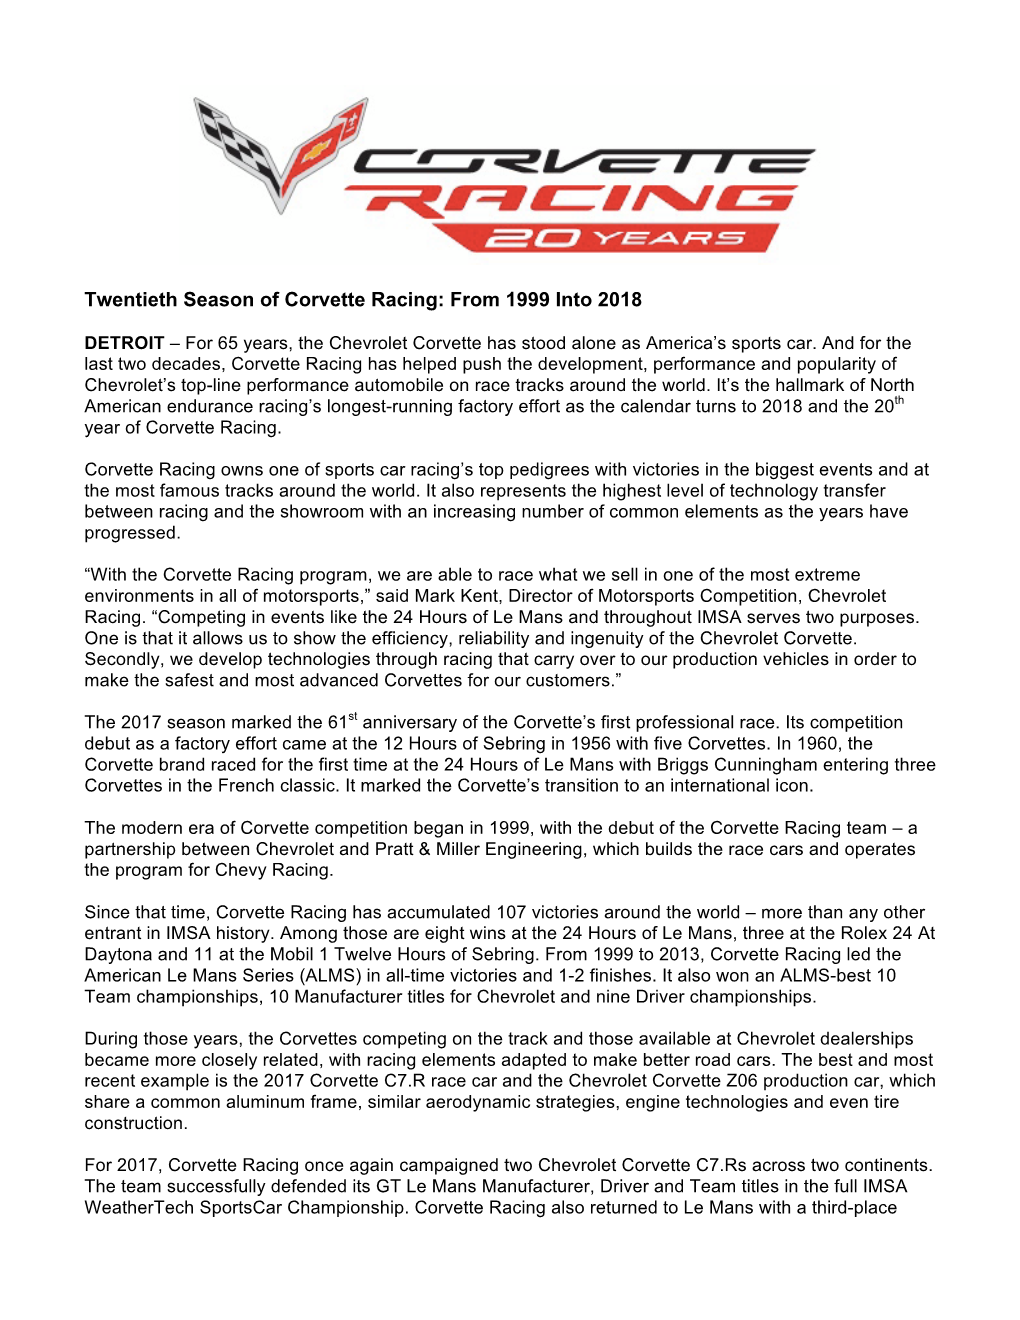 3-History of Corvette Racing